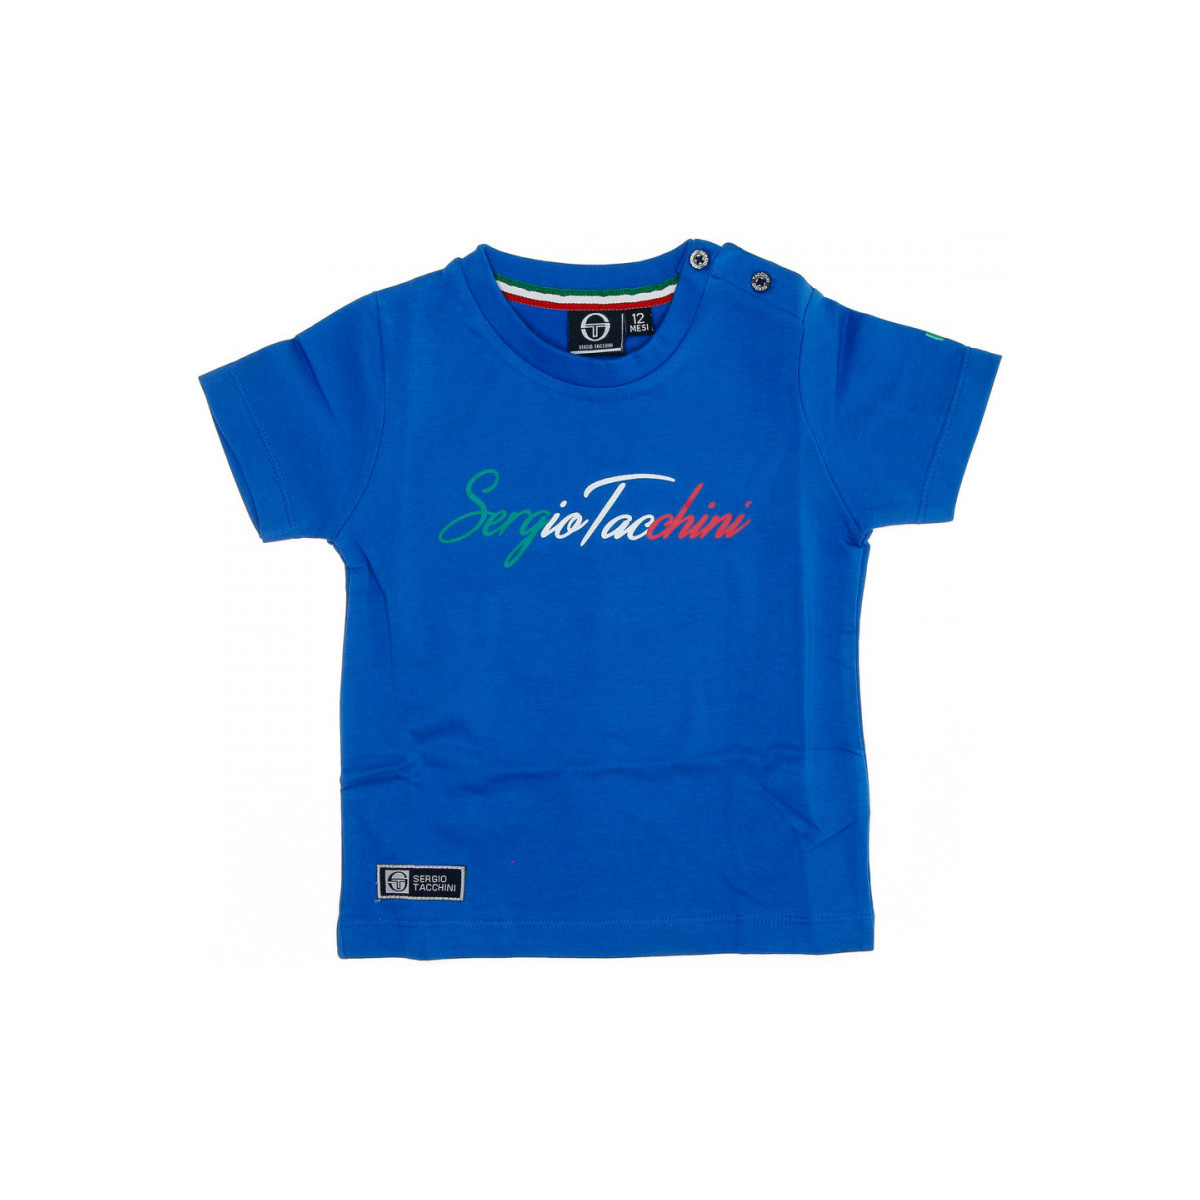 Vêtements Garçon tartine et chocolat blue shirt Sergio Tacchini 3076M0016 Bleu